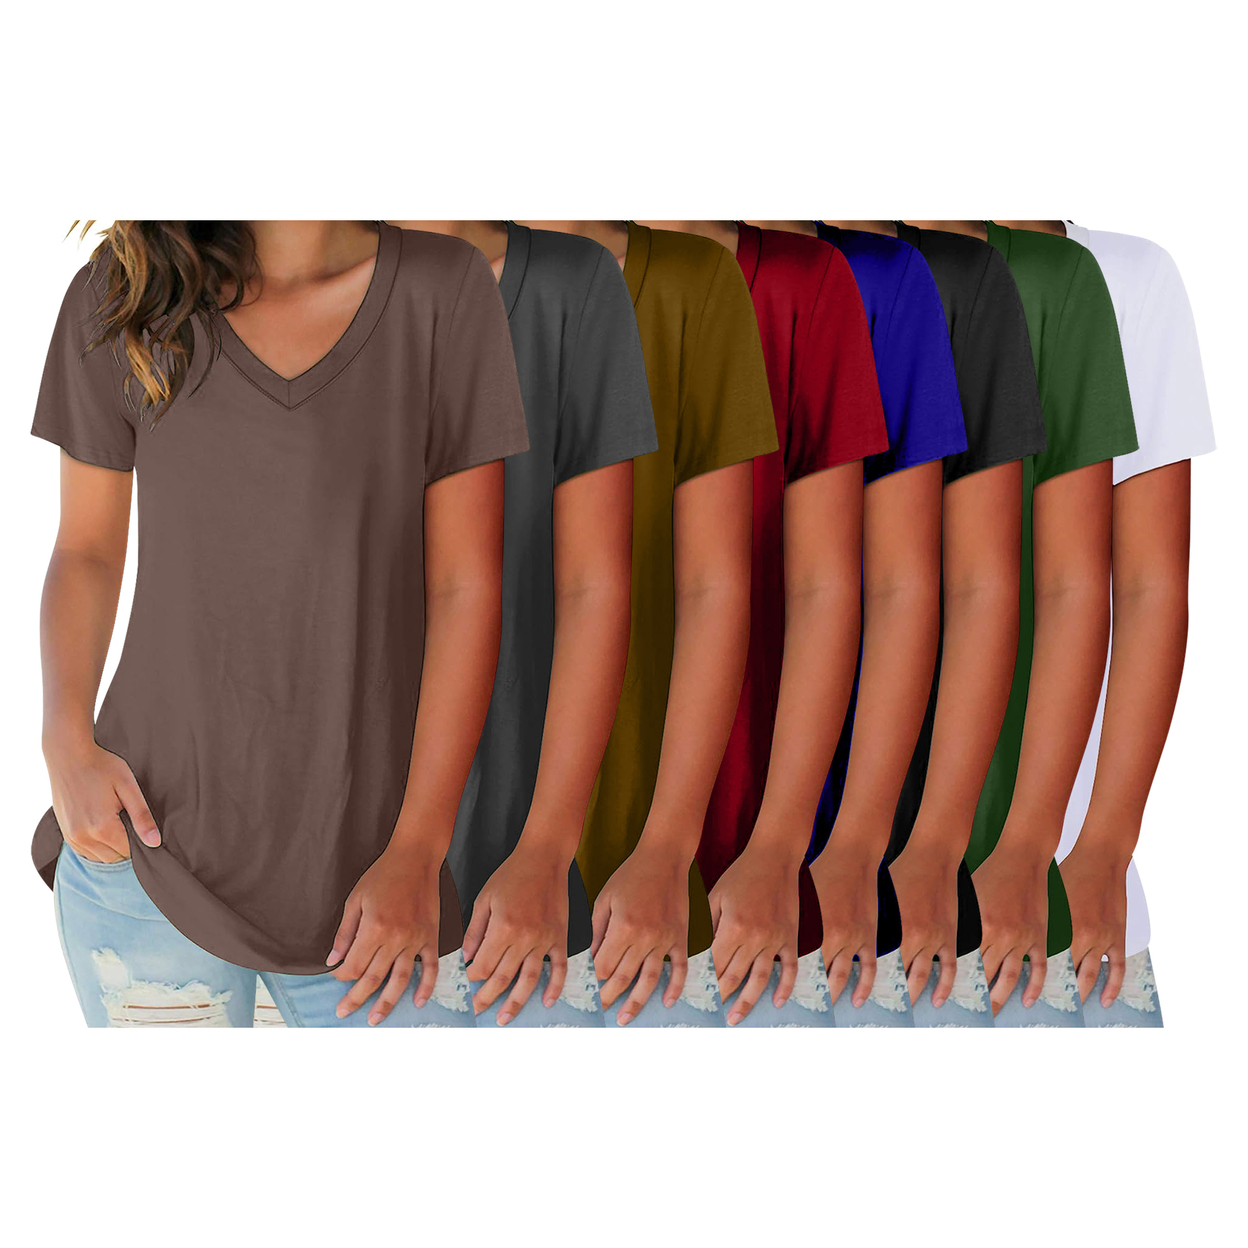 2-Pack: Women's Ultra Soft Smooth Cotton Blend Basic V-Neck Short Sleeve Shirts - Black & Green, Medium